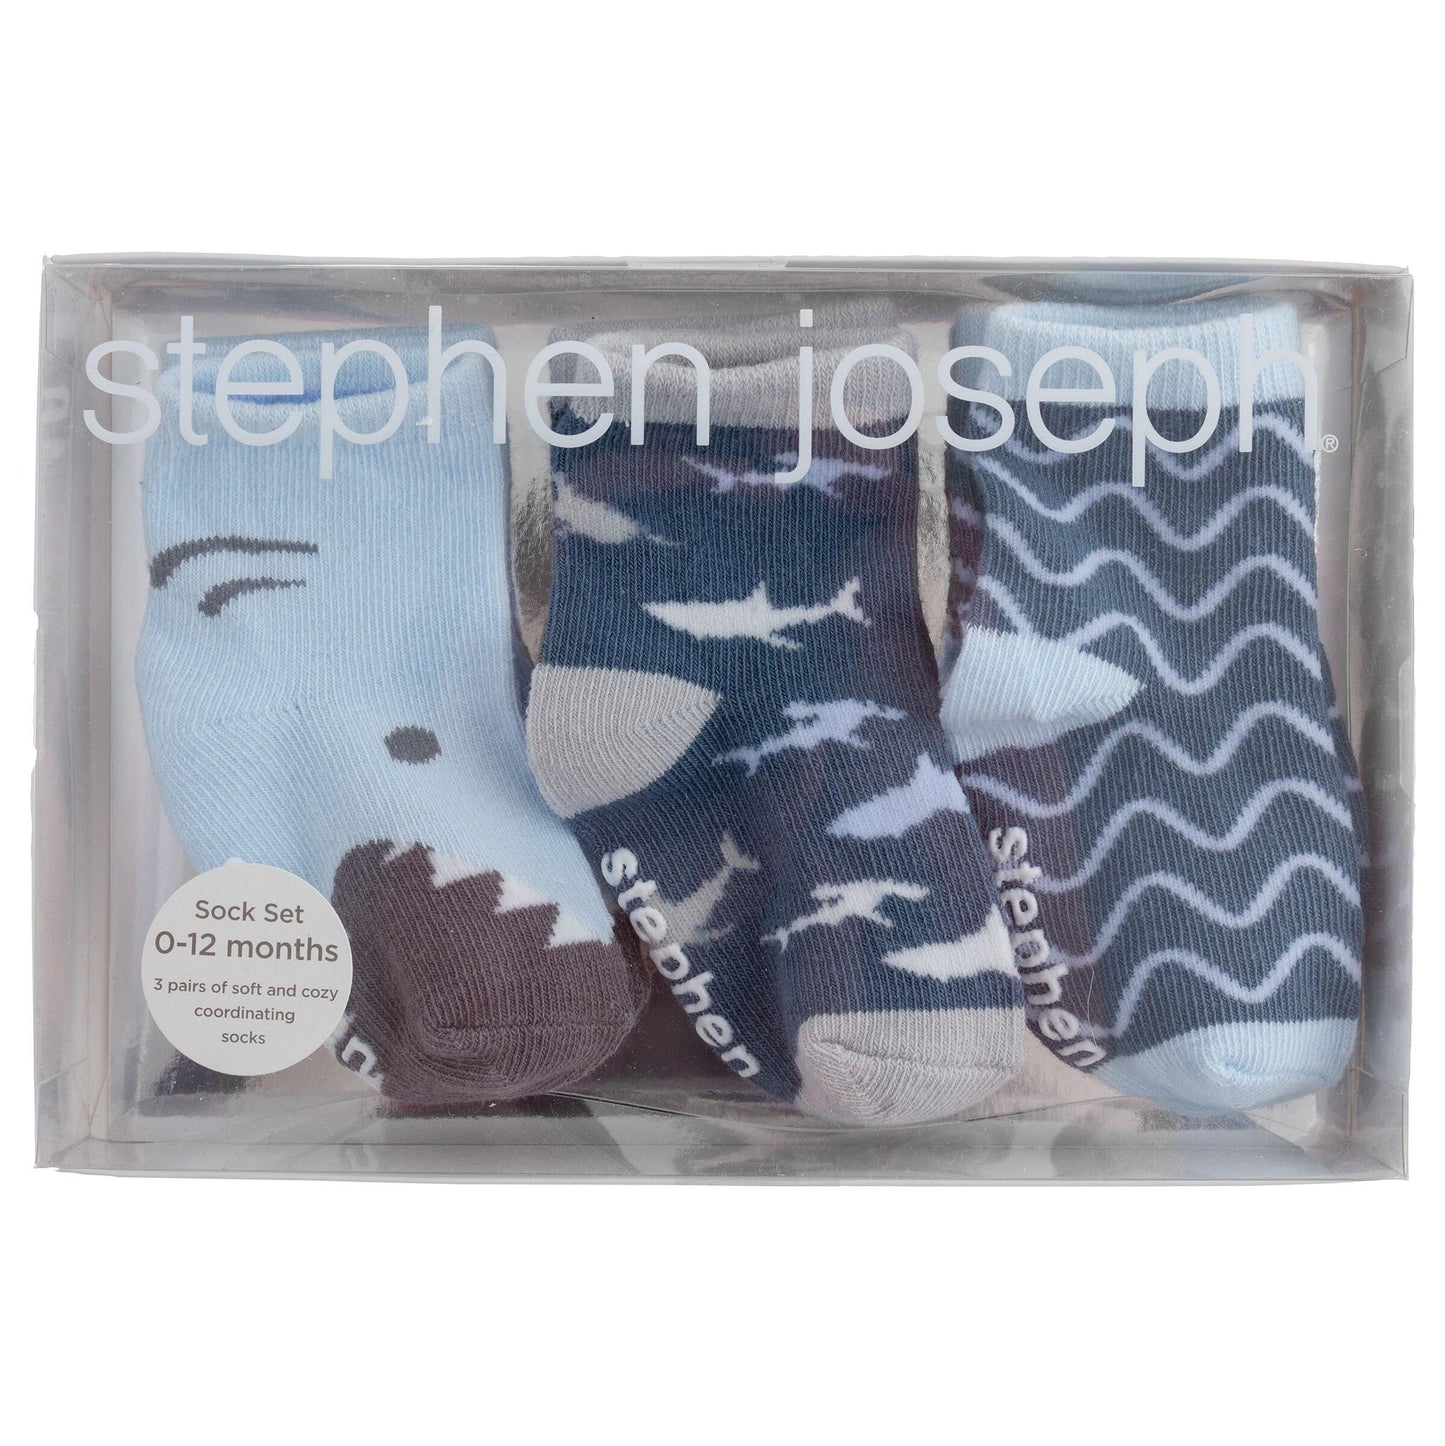 Stephen Joseph Boxed Set Socks - 3 pair